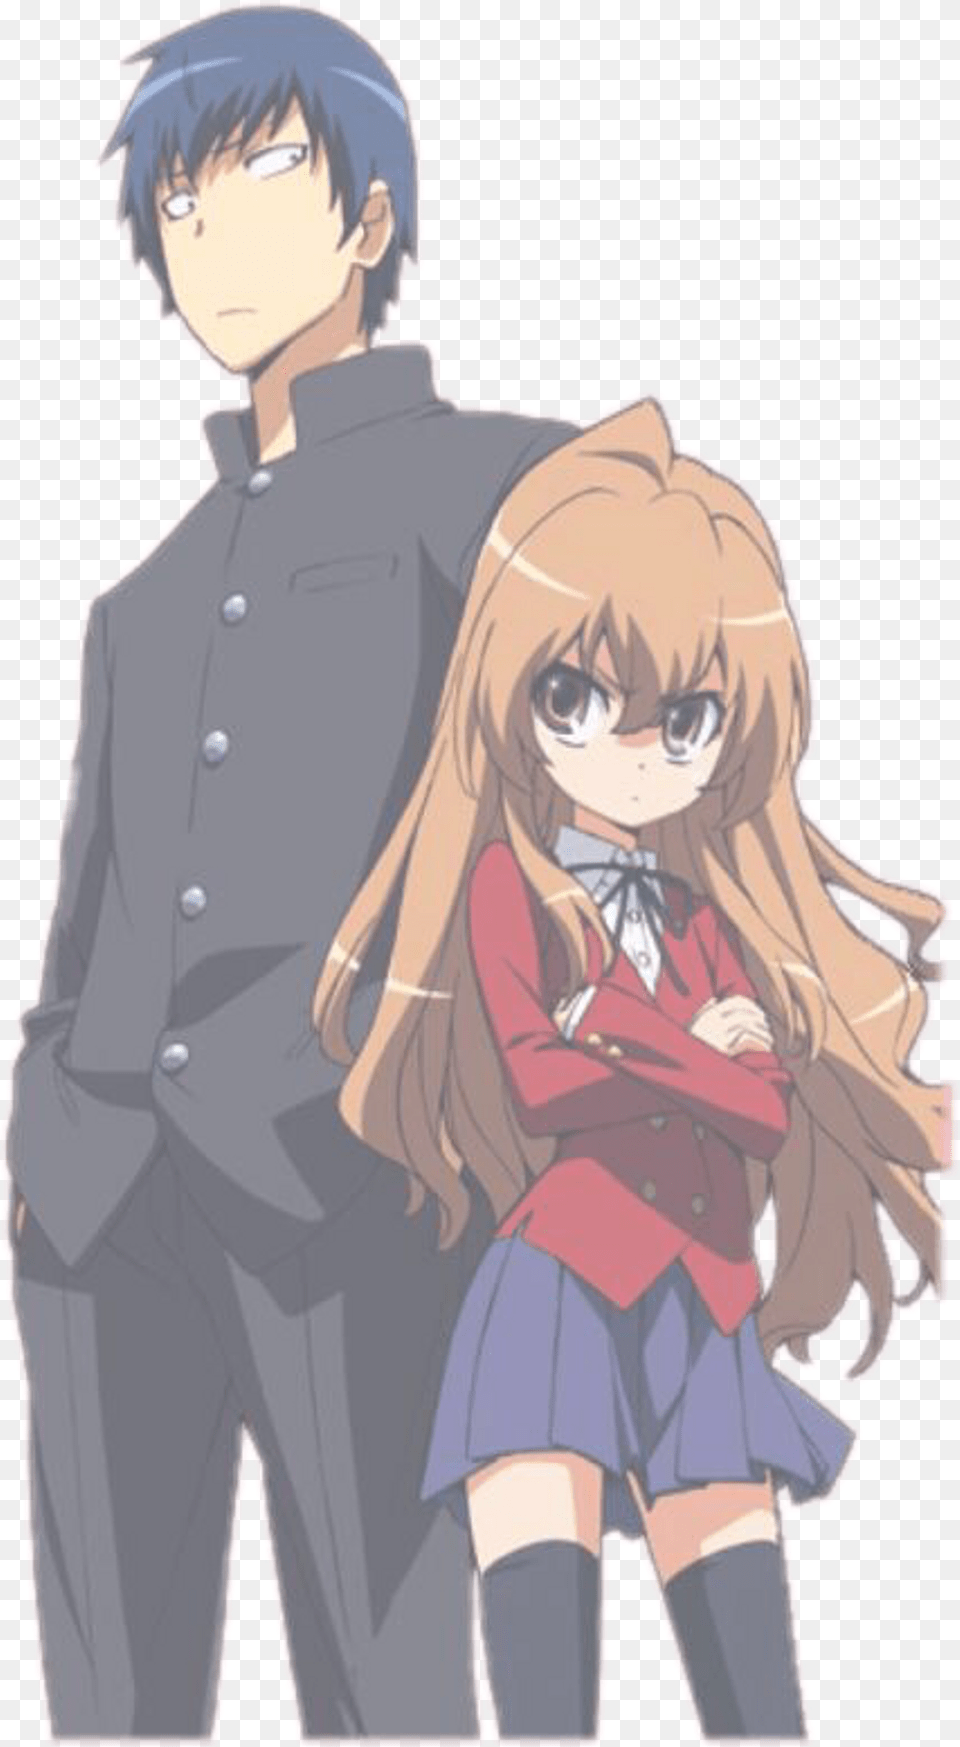 Relationship Anime Couples Cosplay Anime Toradora, Publication, Book, Comics, Manga Png Image